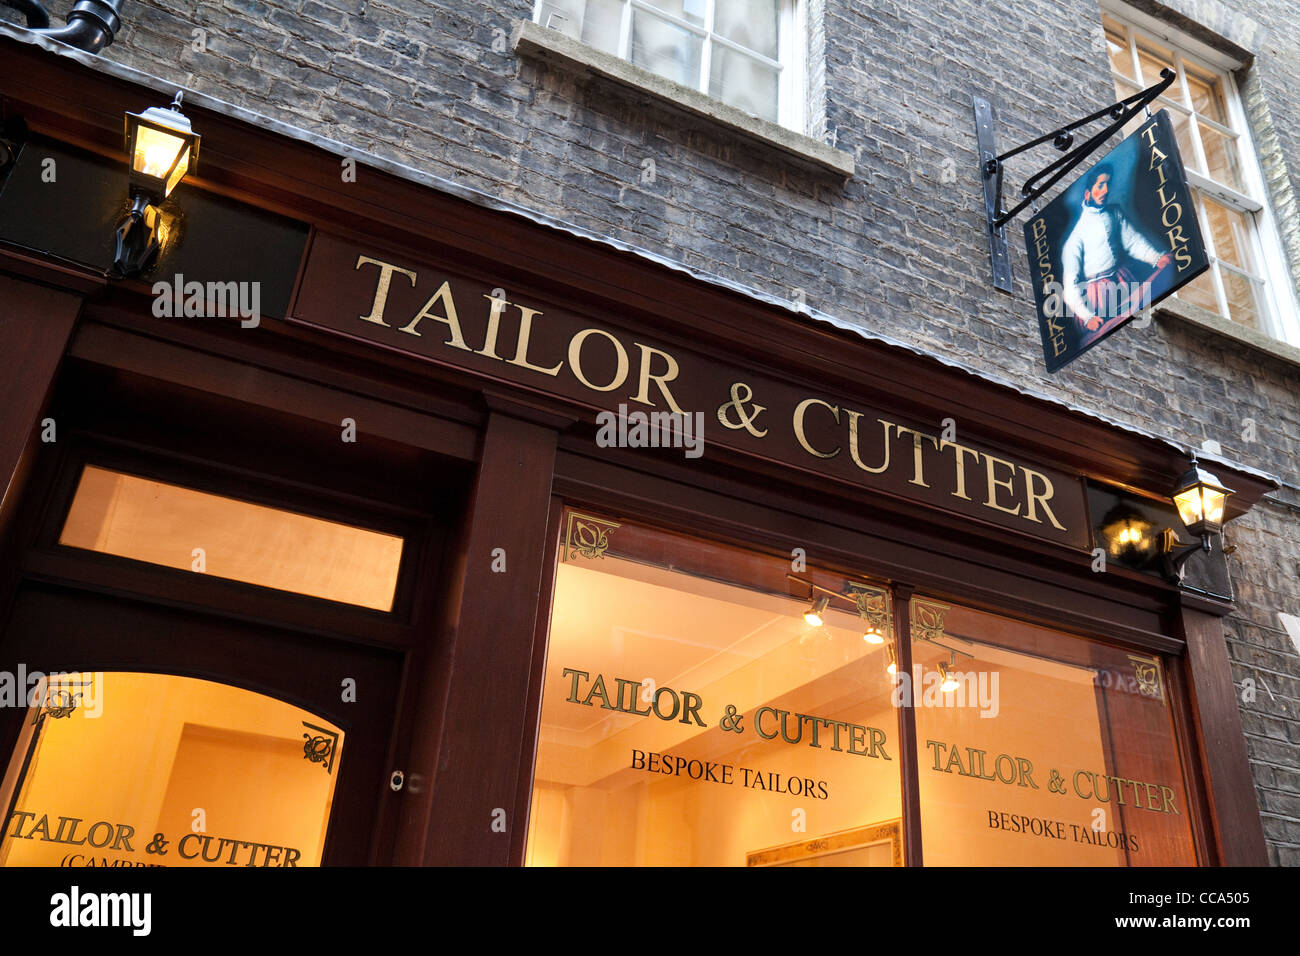 Tailor & Cutter bespoke sastres tienda, Cambridge, Reino Unido Foto de stock